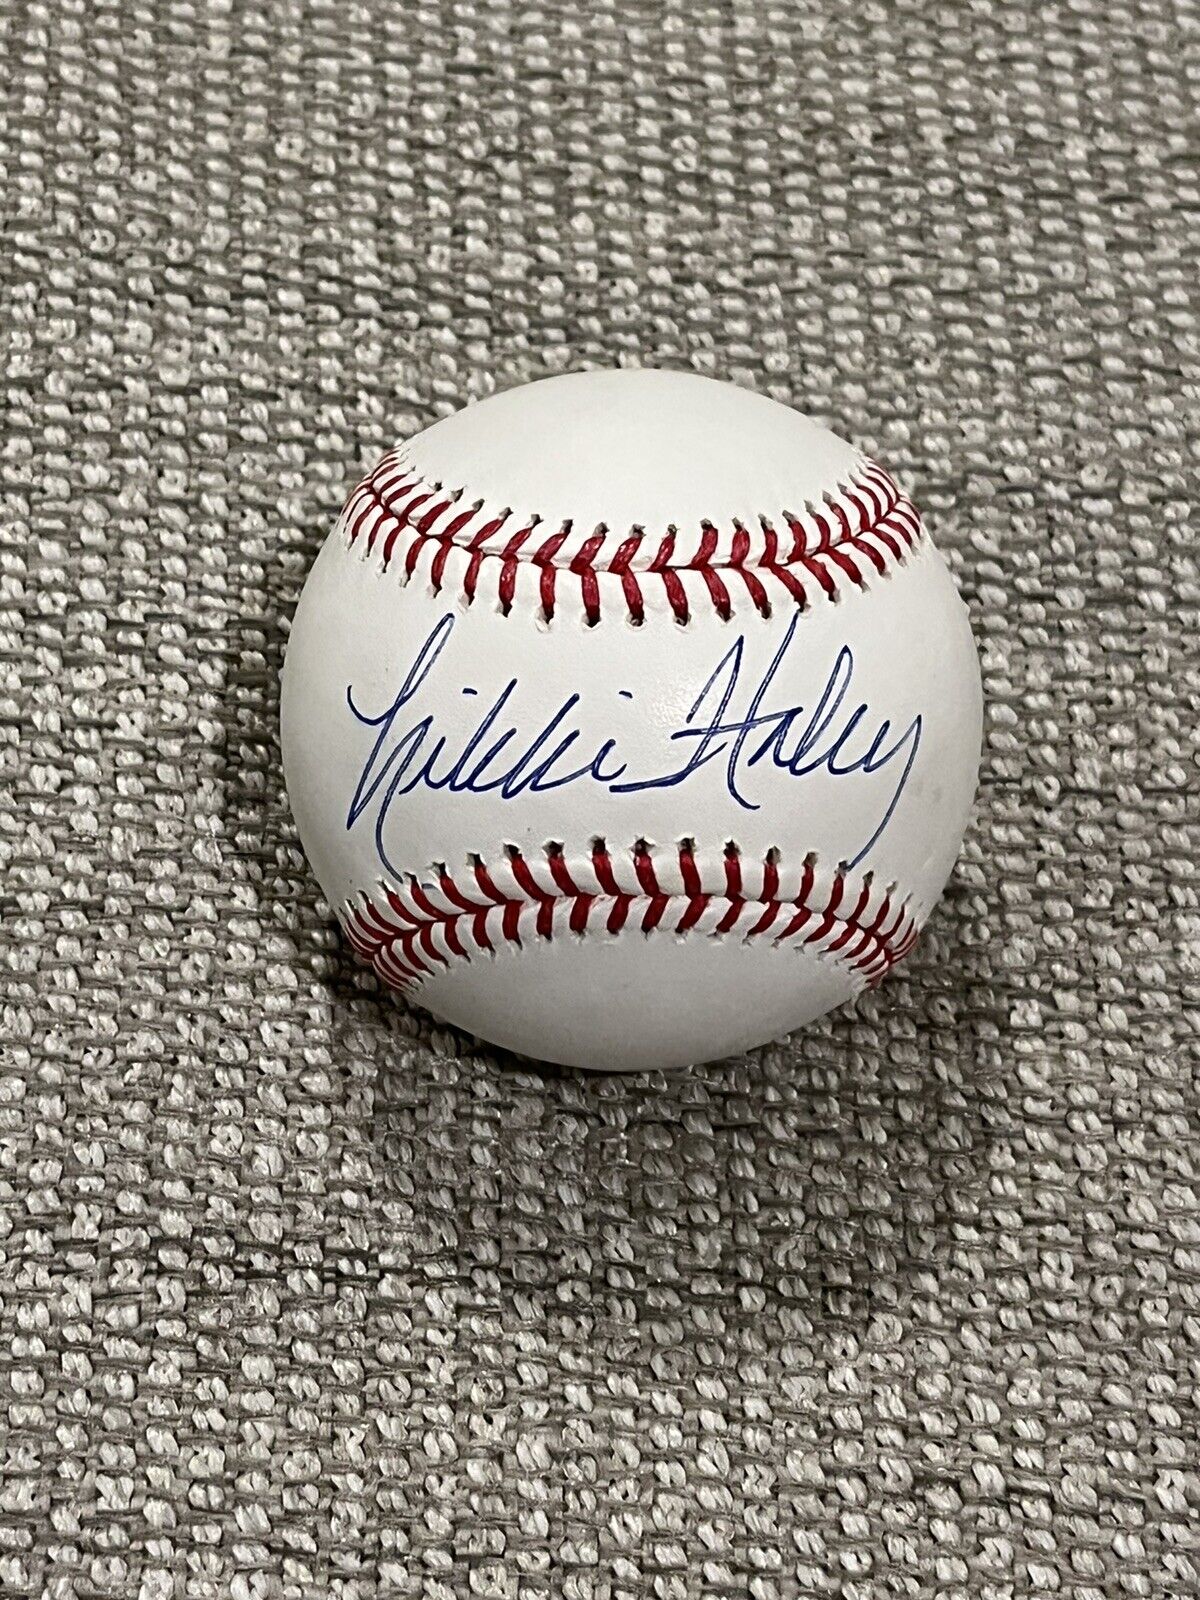 EXACT PROOF NIKKI HALEY Signed Autographed ROMLB Baseball Presidential Candidate